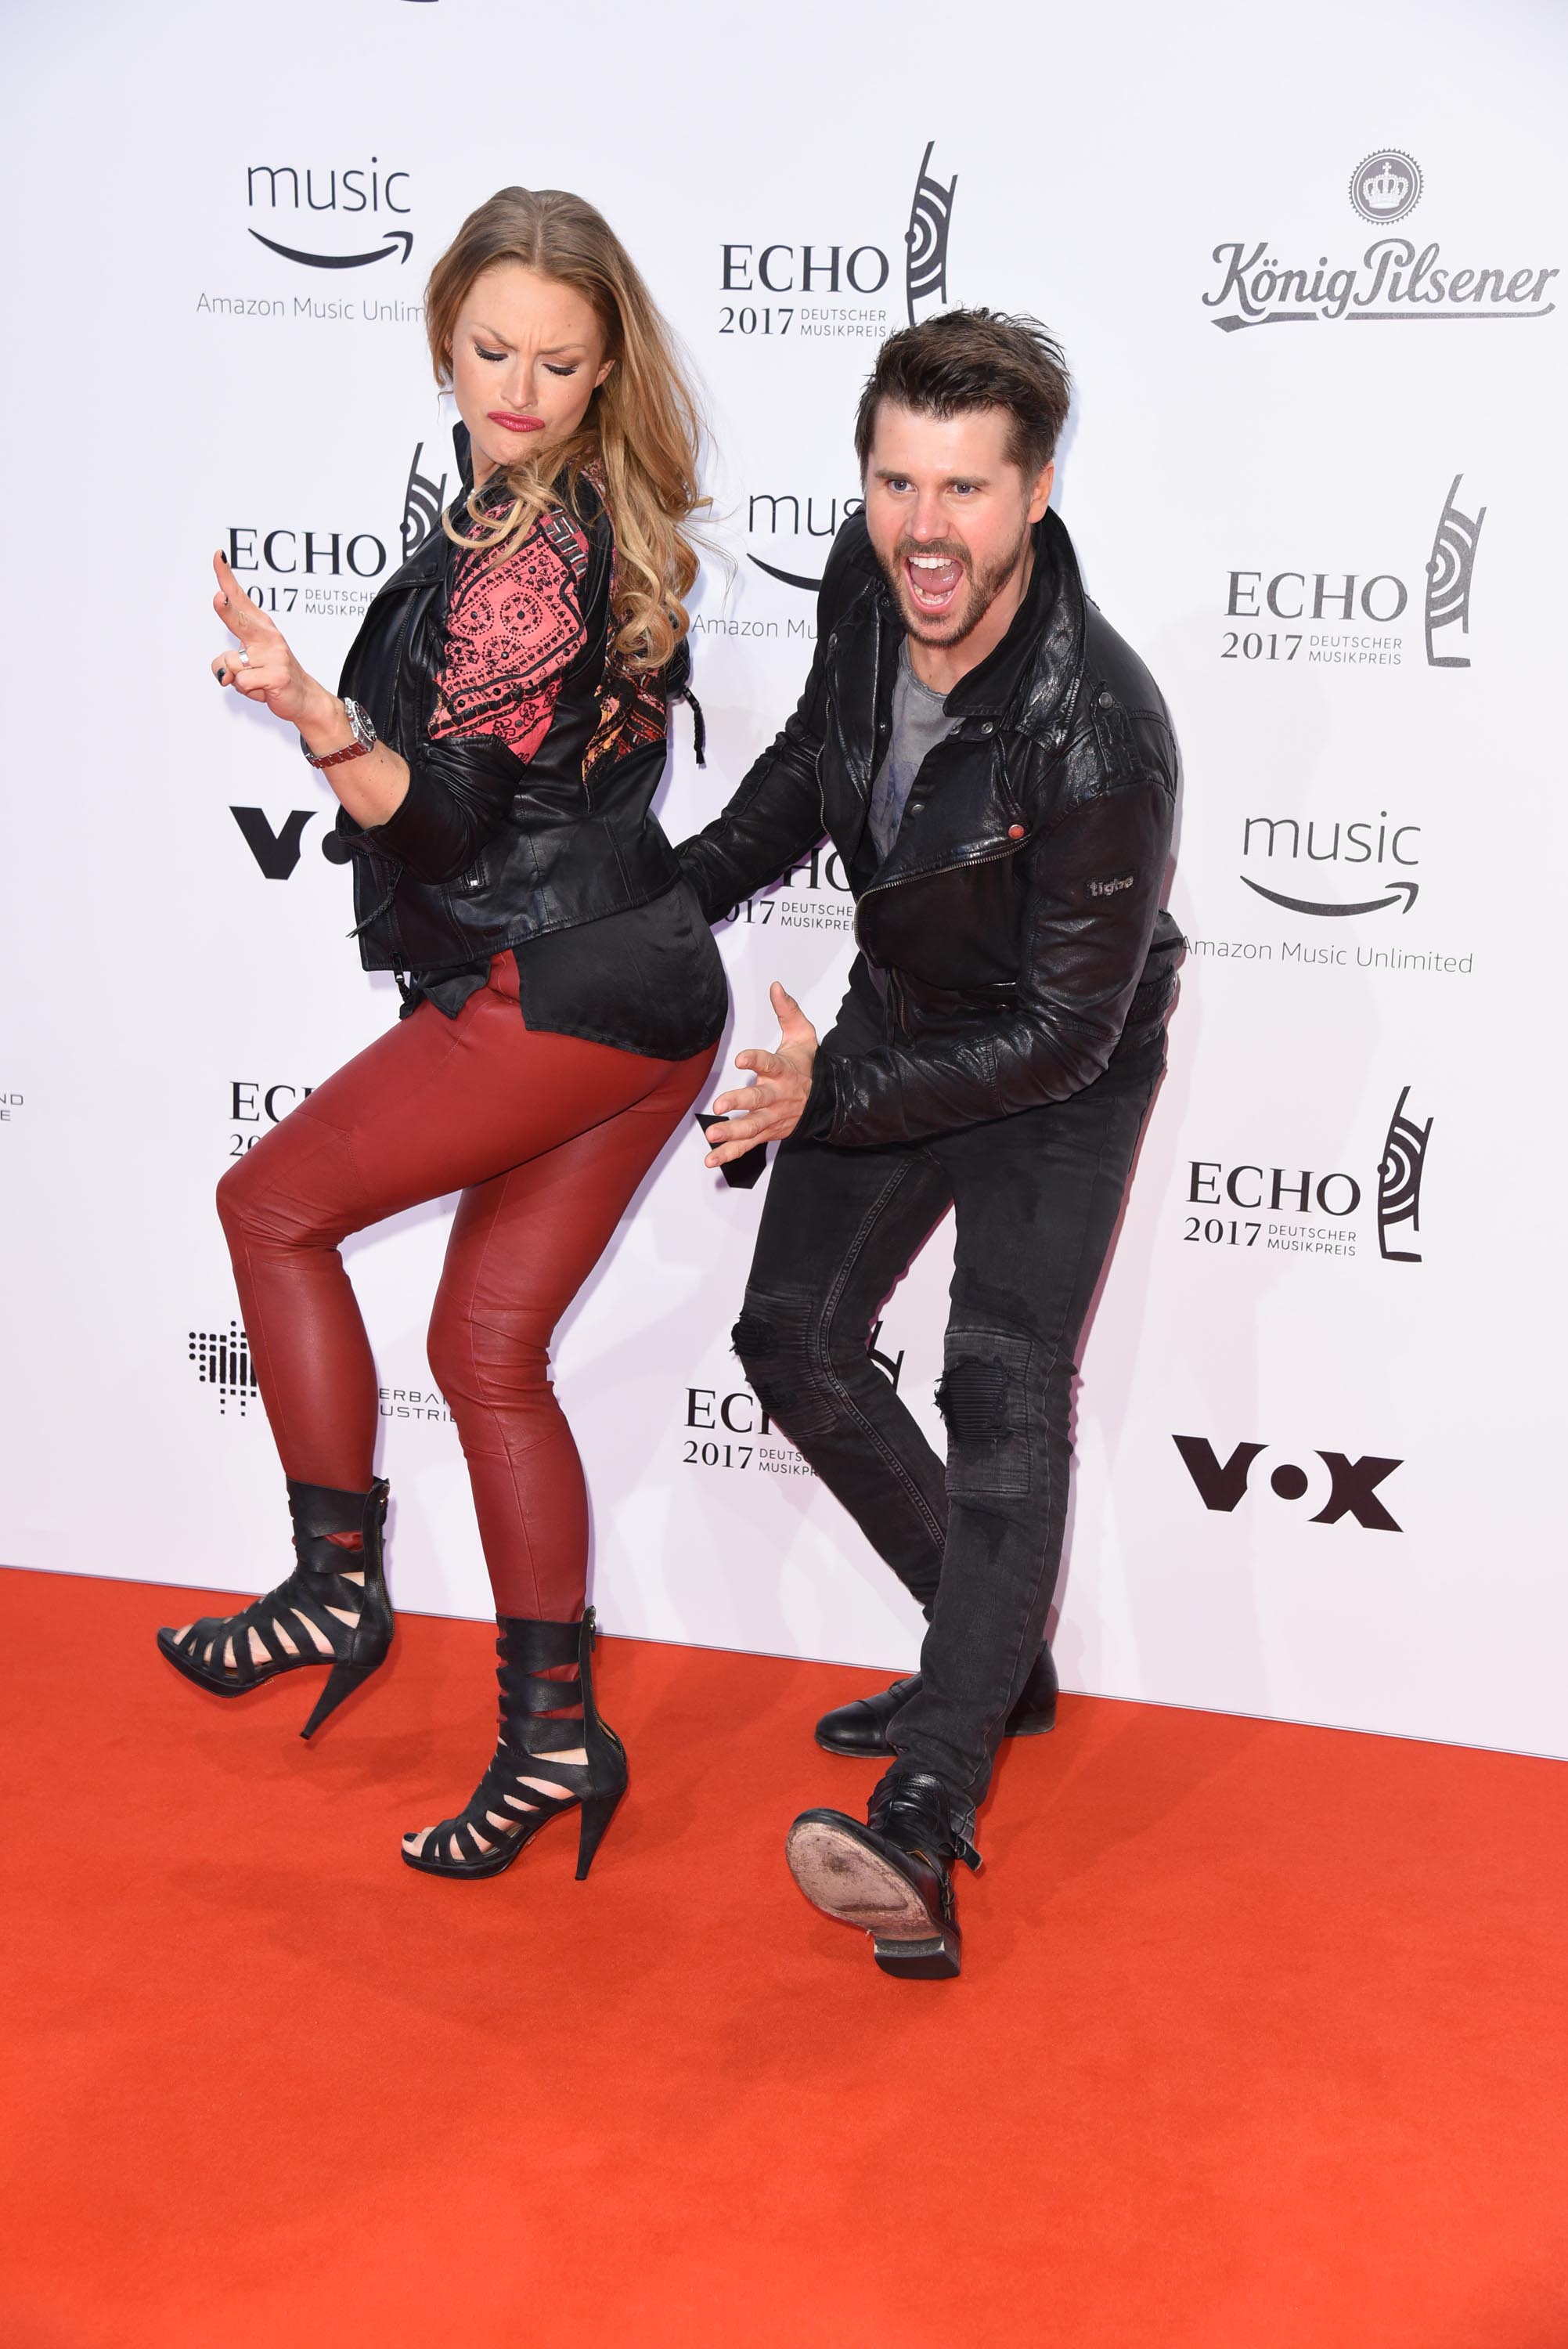 Jana Julie Kilka attends ECHO Music Awards